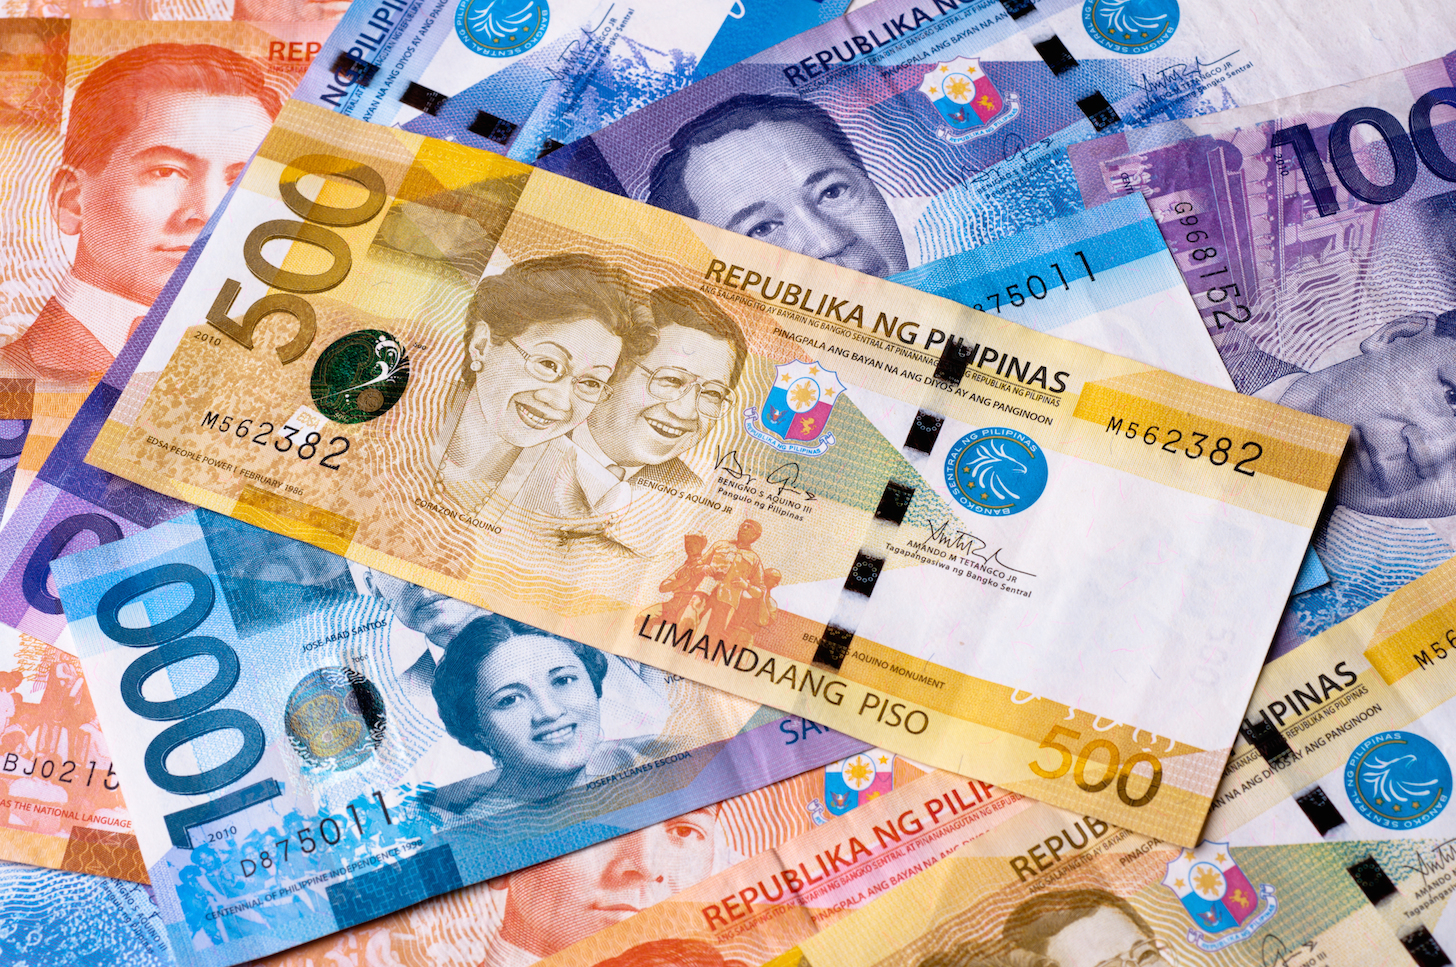 Cbr currency. Филиппины валюта. Филиппины деньги. Песо Филиппины. Филиппинские купюры.